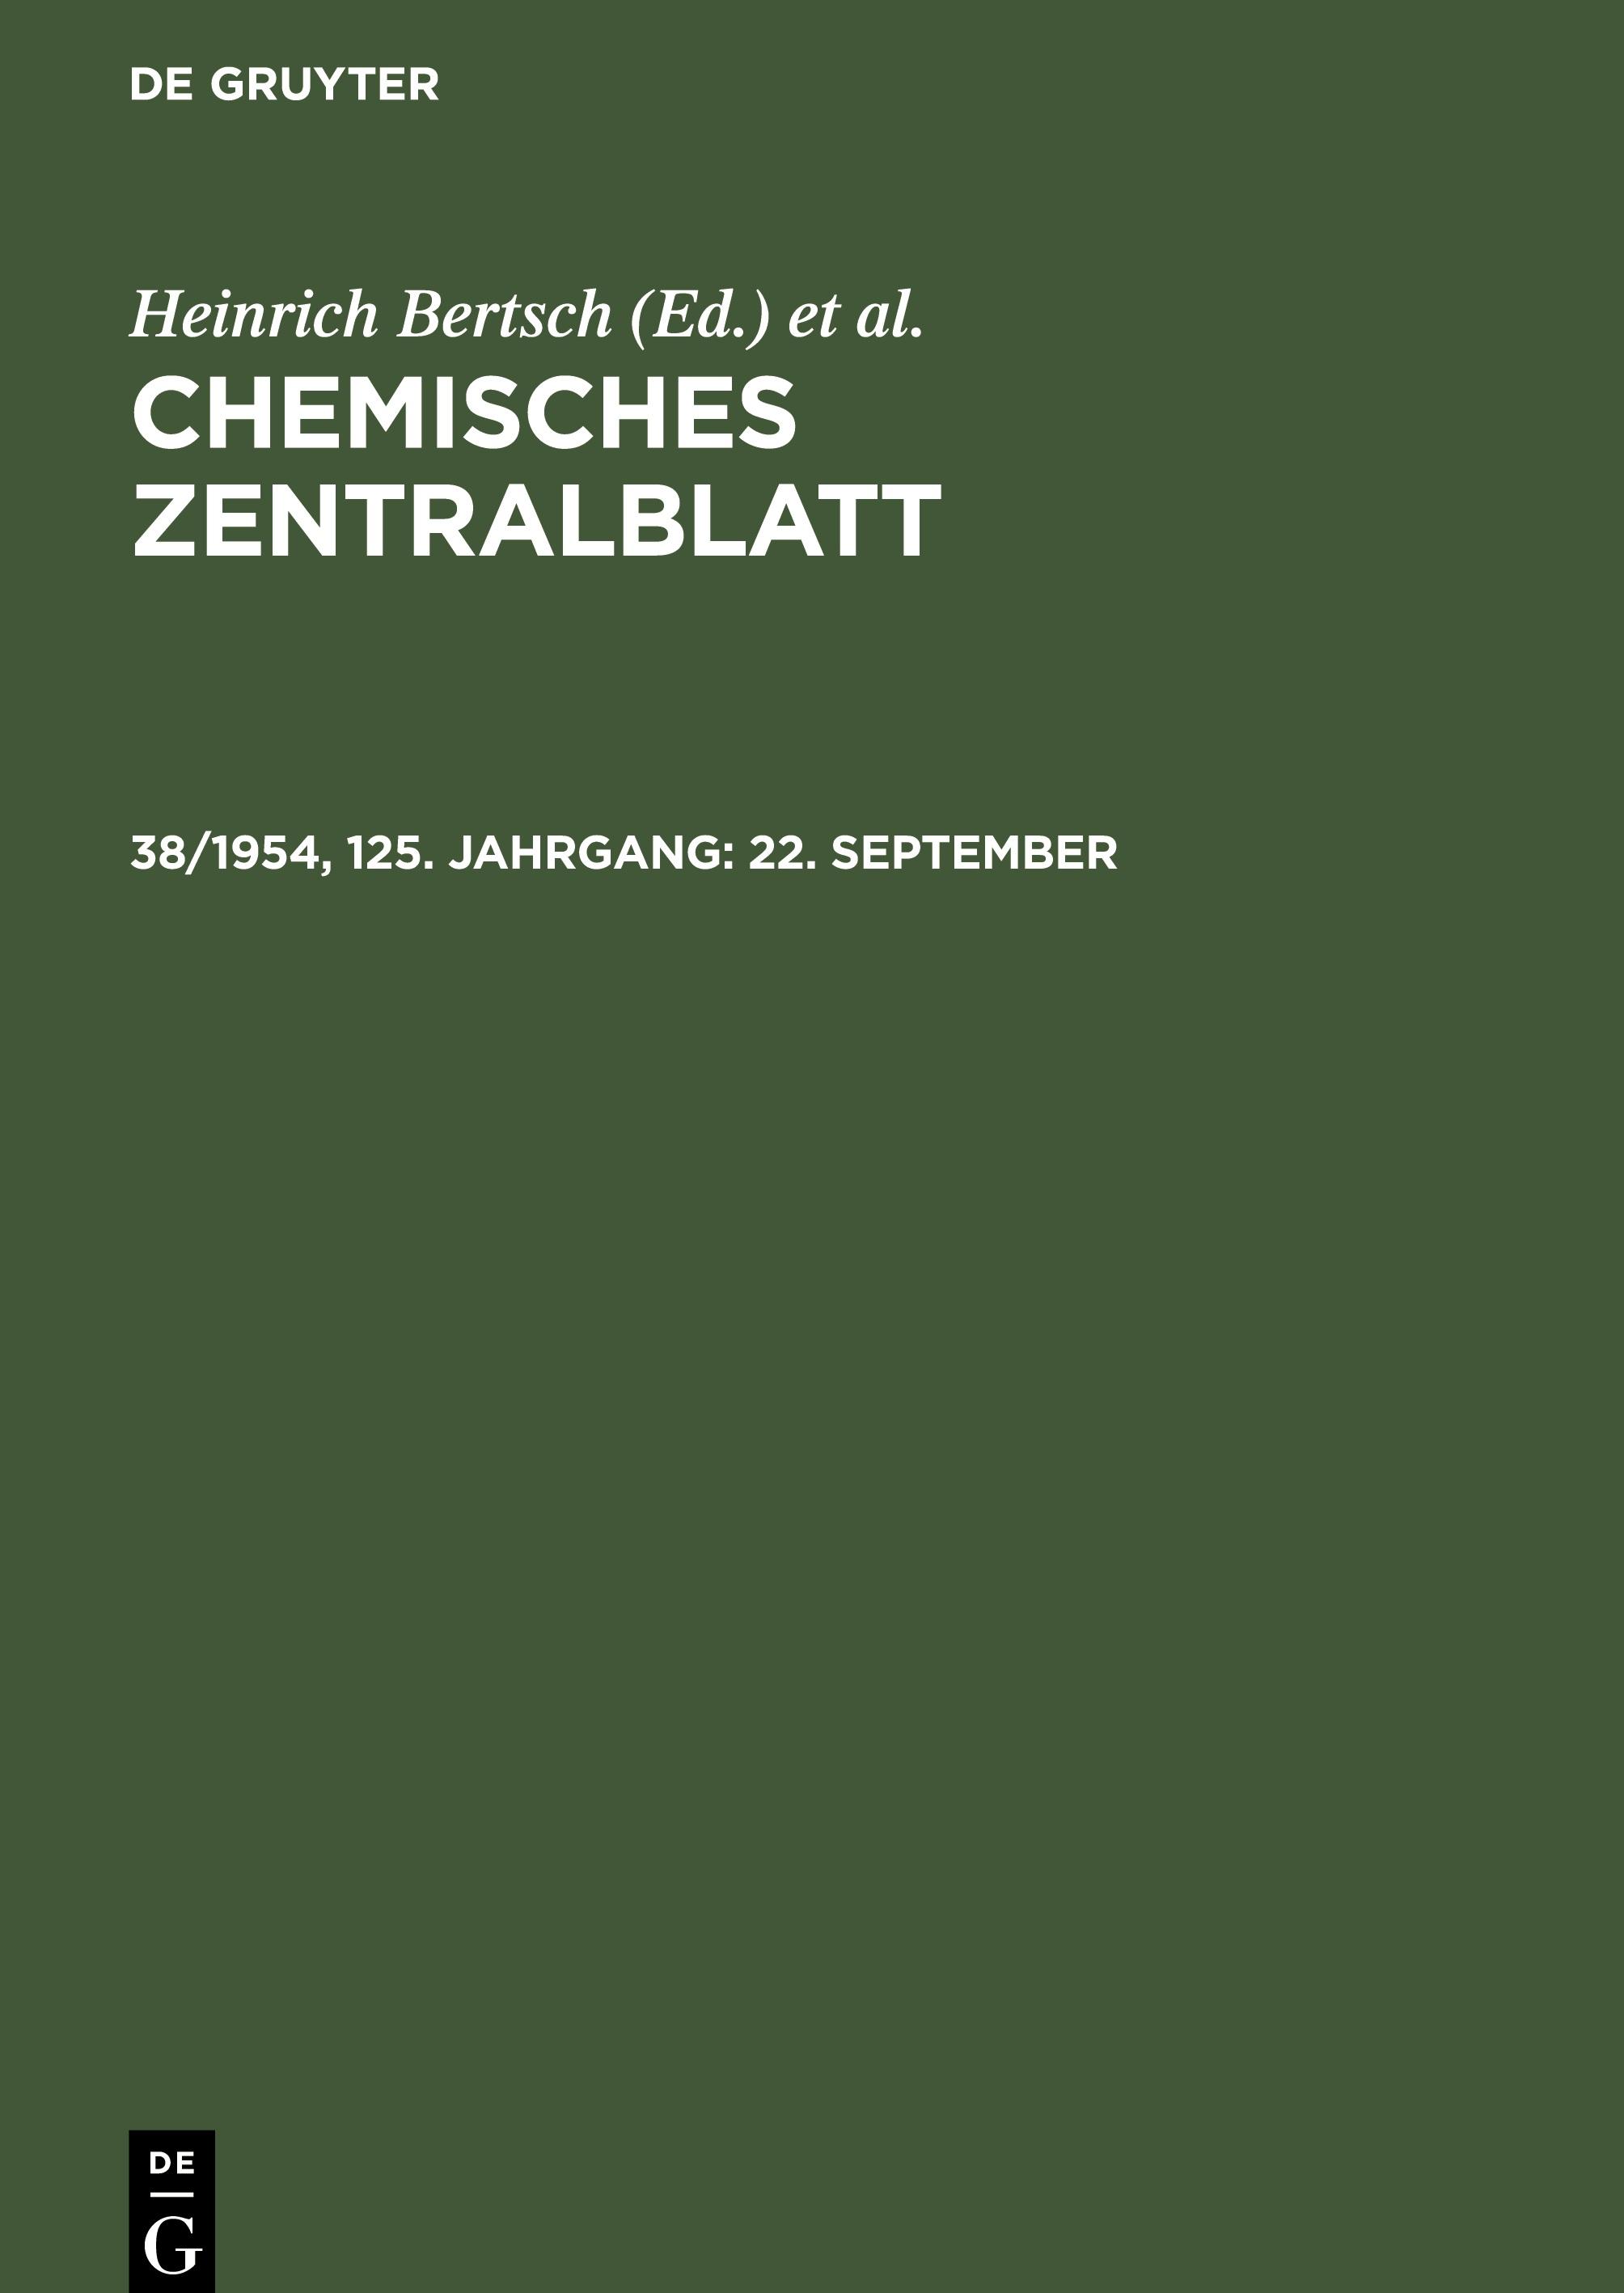 Chemisches Zentralblatt, 38/1954, 125. Jahrgang, 22. September